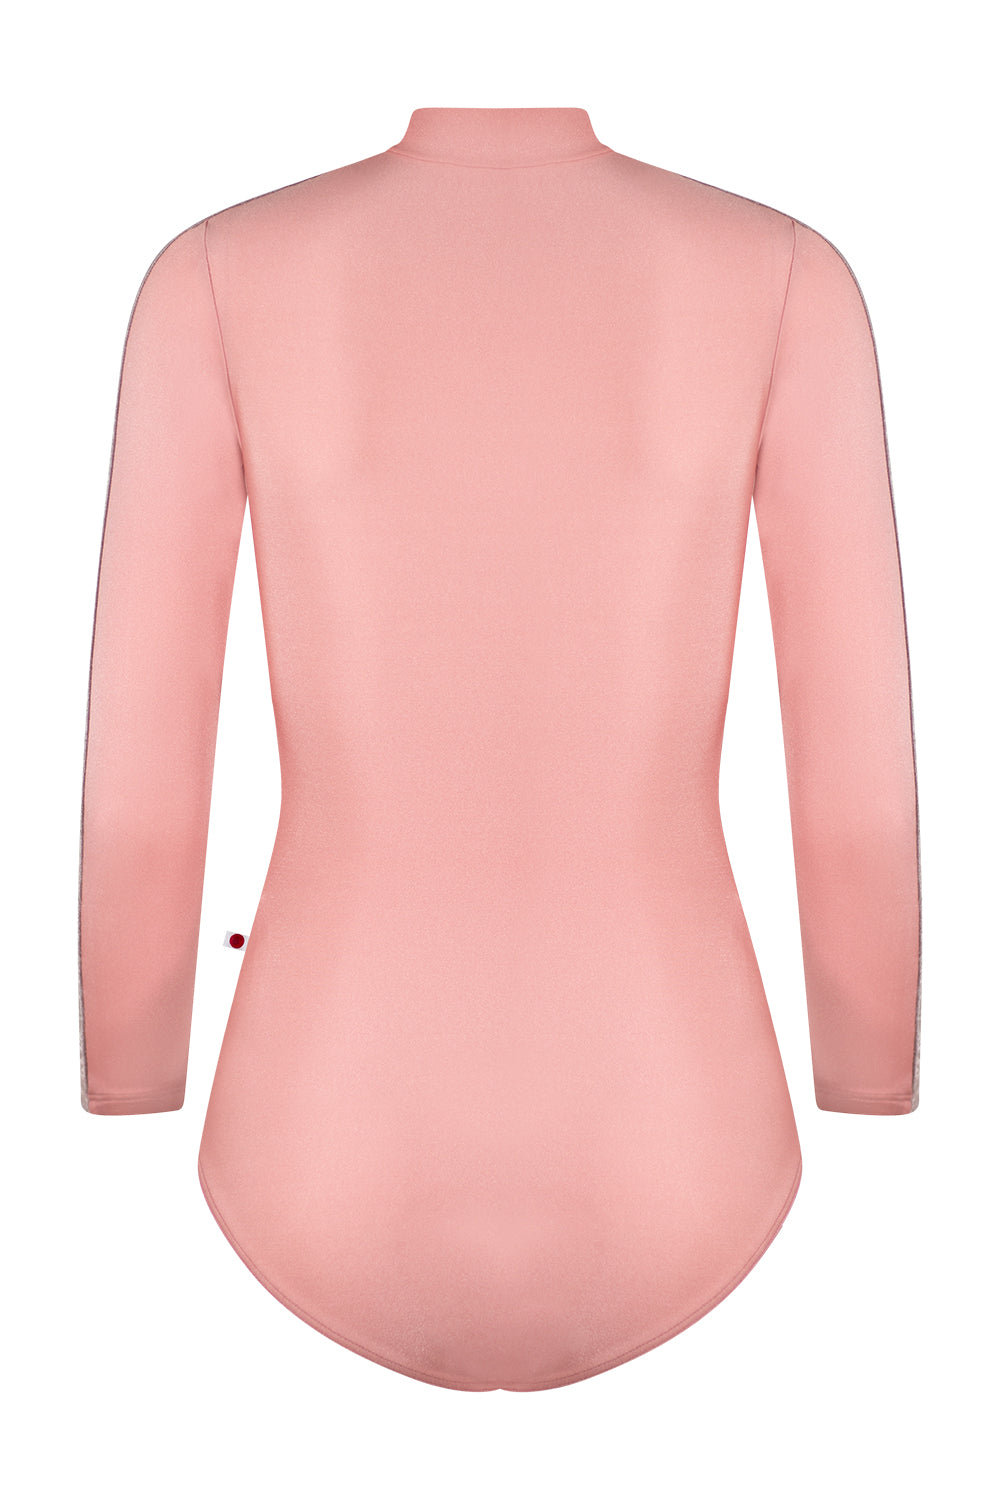 Jessica Black Label leotard in N-Antique rose body color with CV-Phantom side stripe and long sleeves